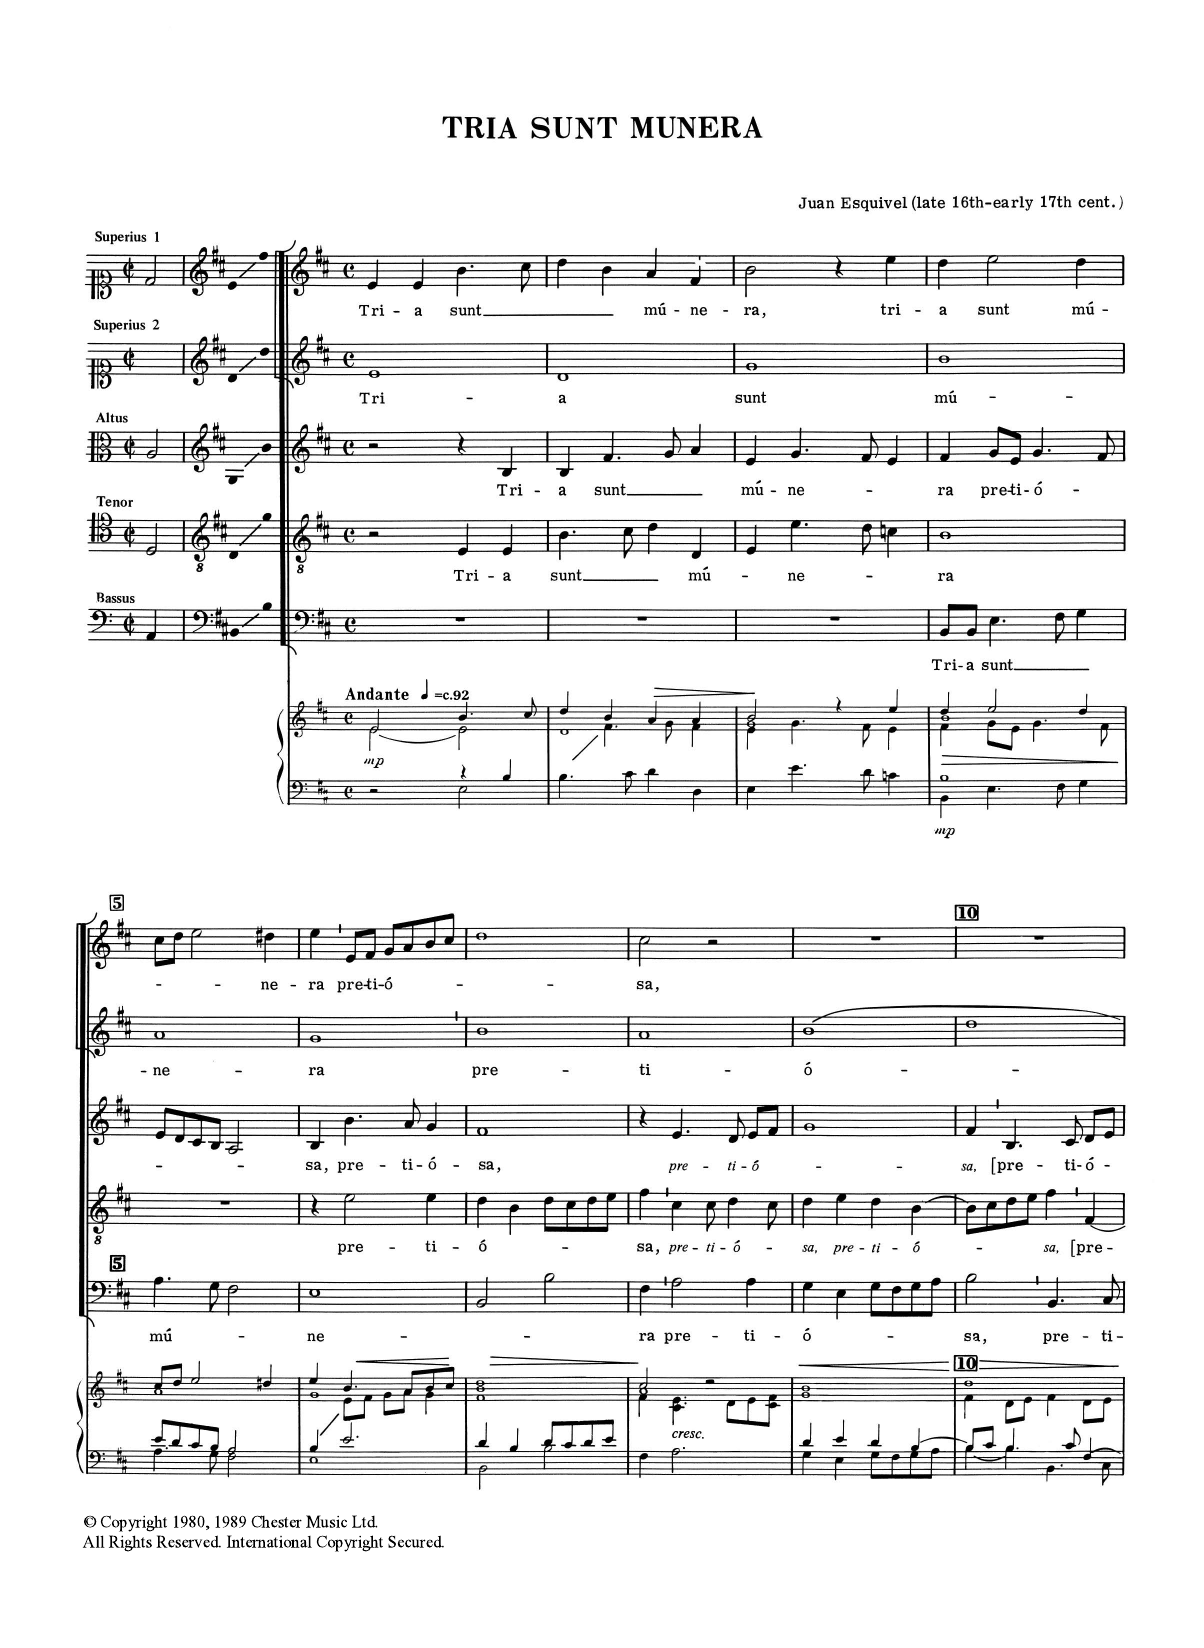 Juan Esquivel Tria Sunt Munera sheet music notes and chords arranged for SATB Choir